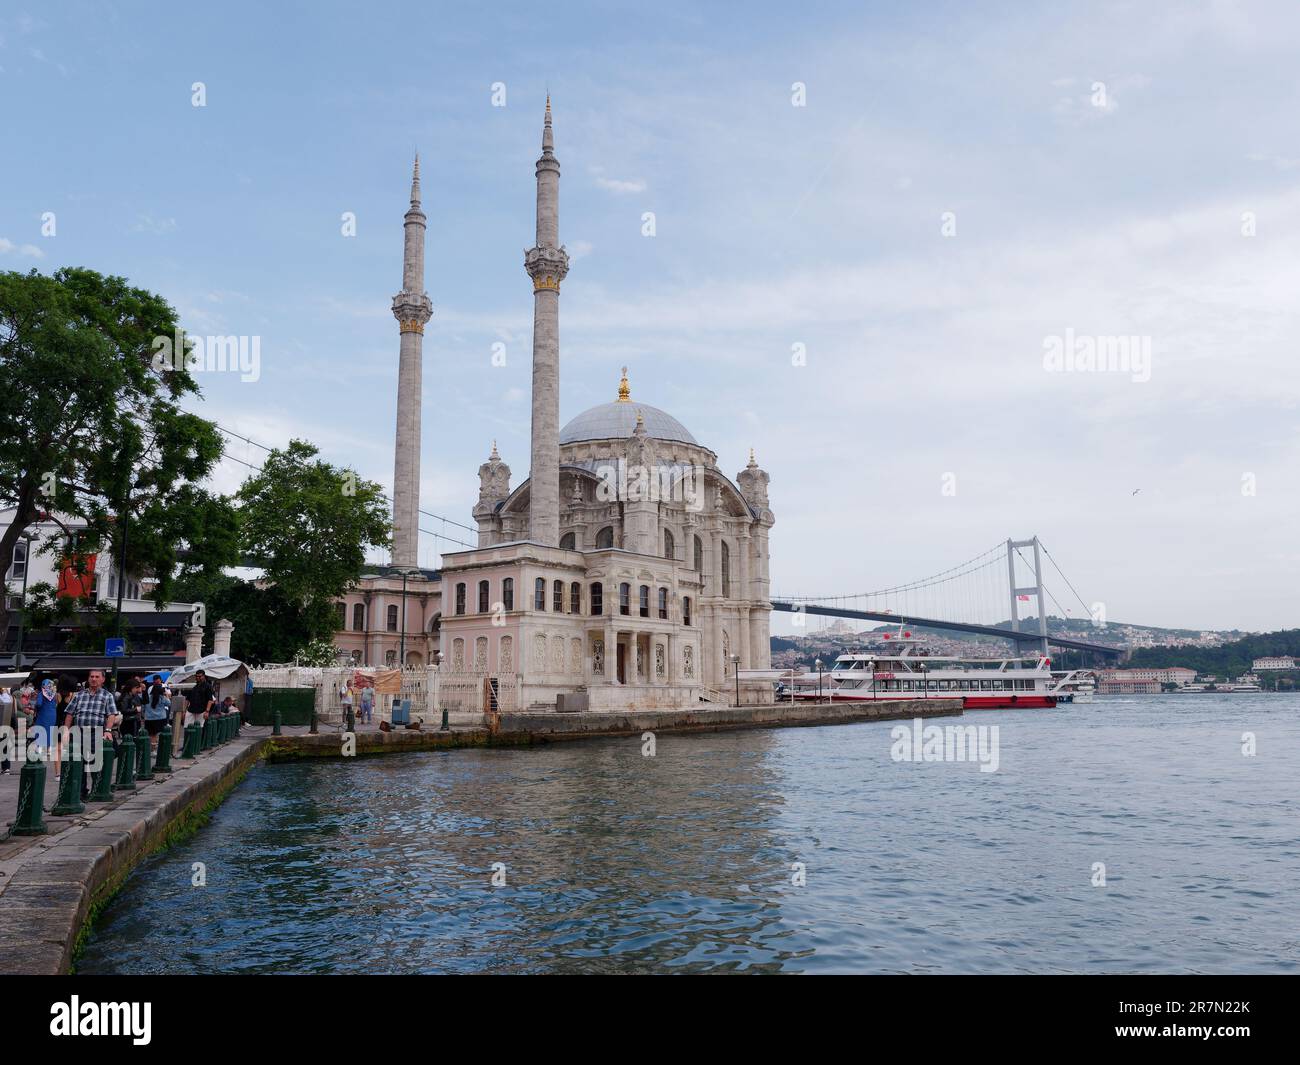 Moschea Büyük-Mecidiye, nota anche come Moschea Ortaköy, a Ortaköy accanto al Bosforo a Istanbul, Turchia. Foto Stock